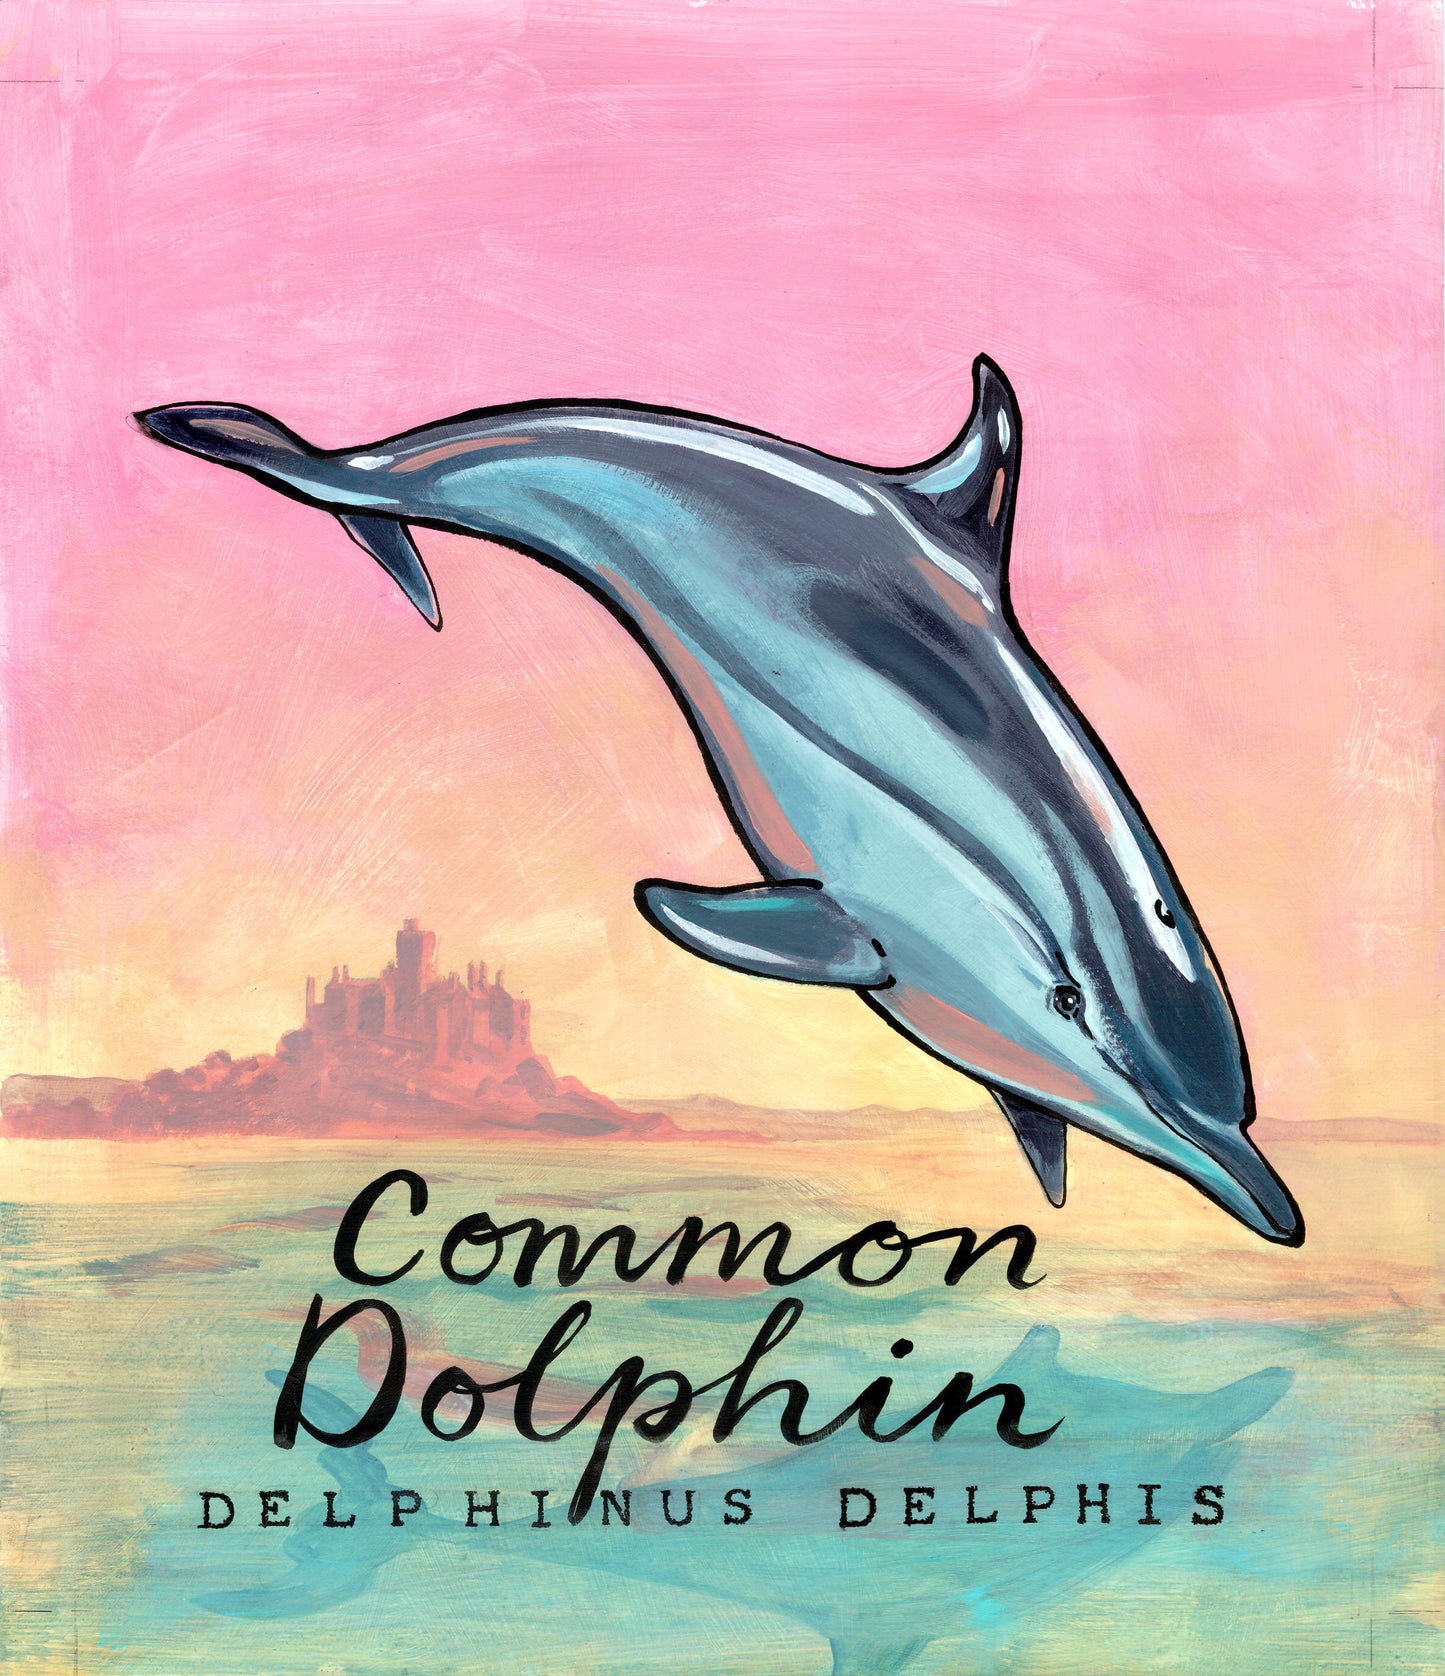 Common Dolphin Promenade Flag - Cornish Sea Life series - Giclée Print